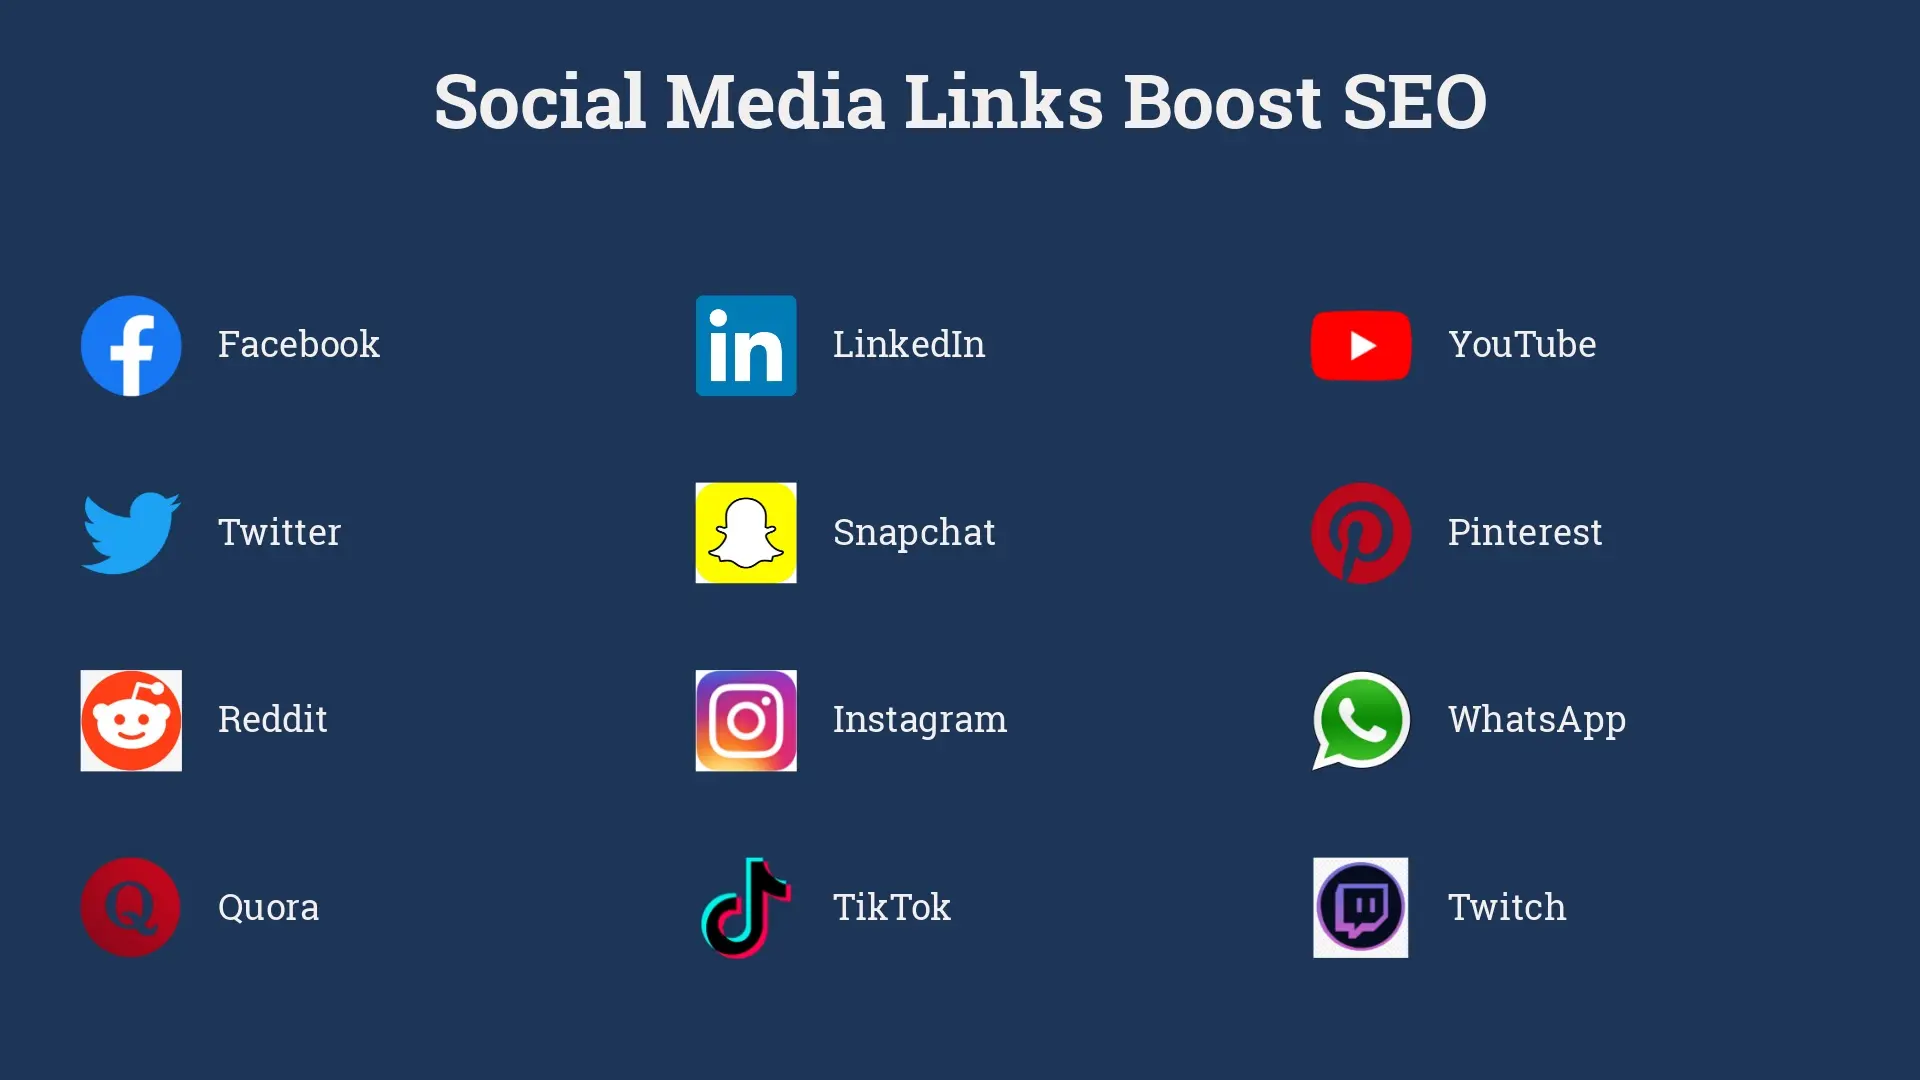 List of social media platforms with accompanying logos